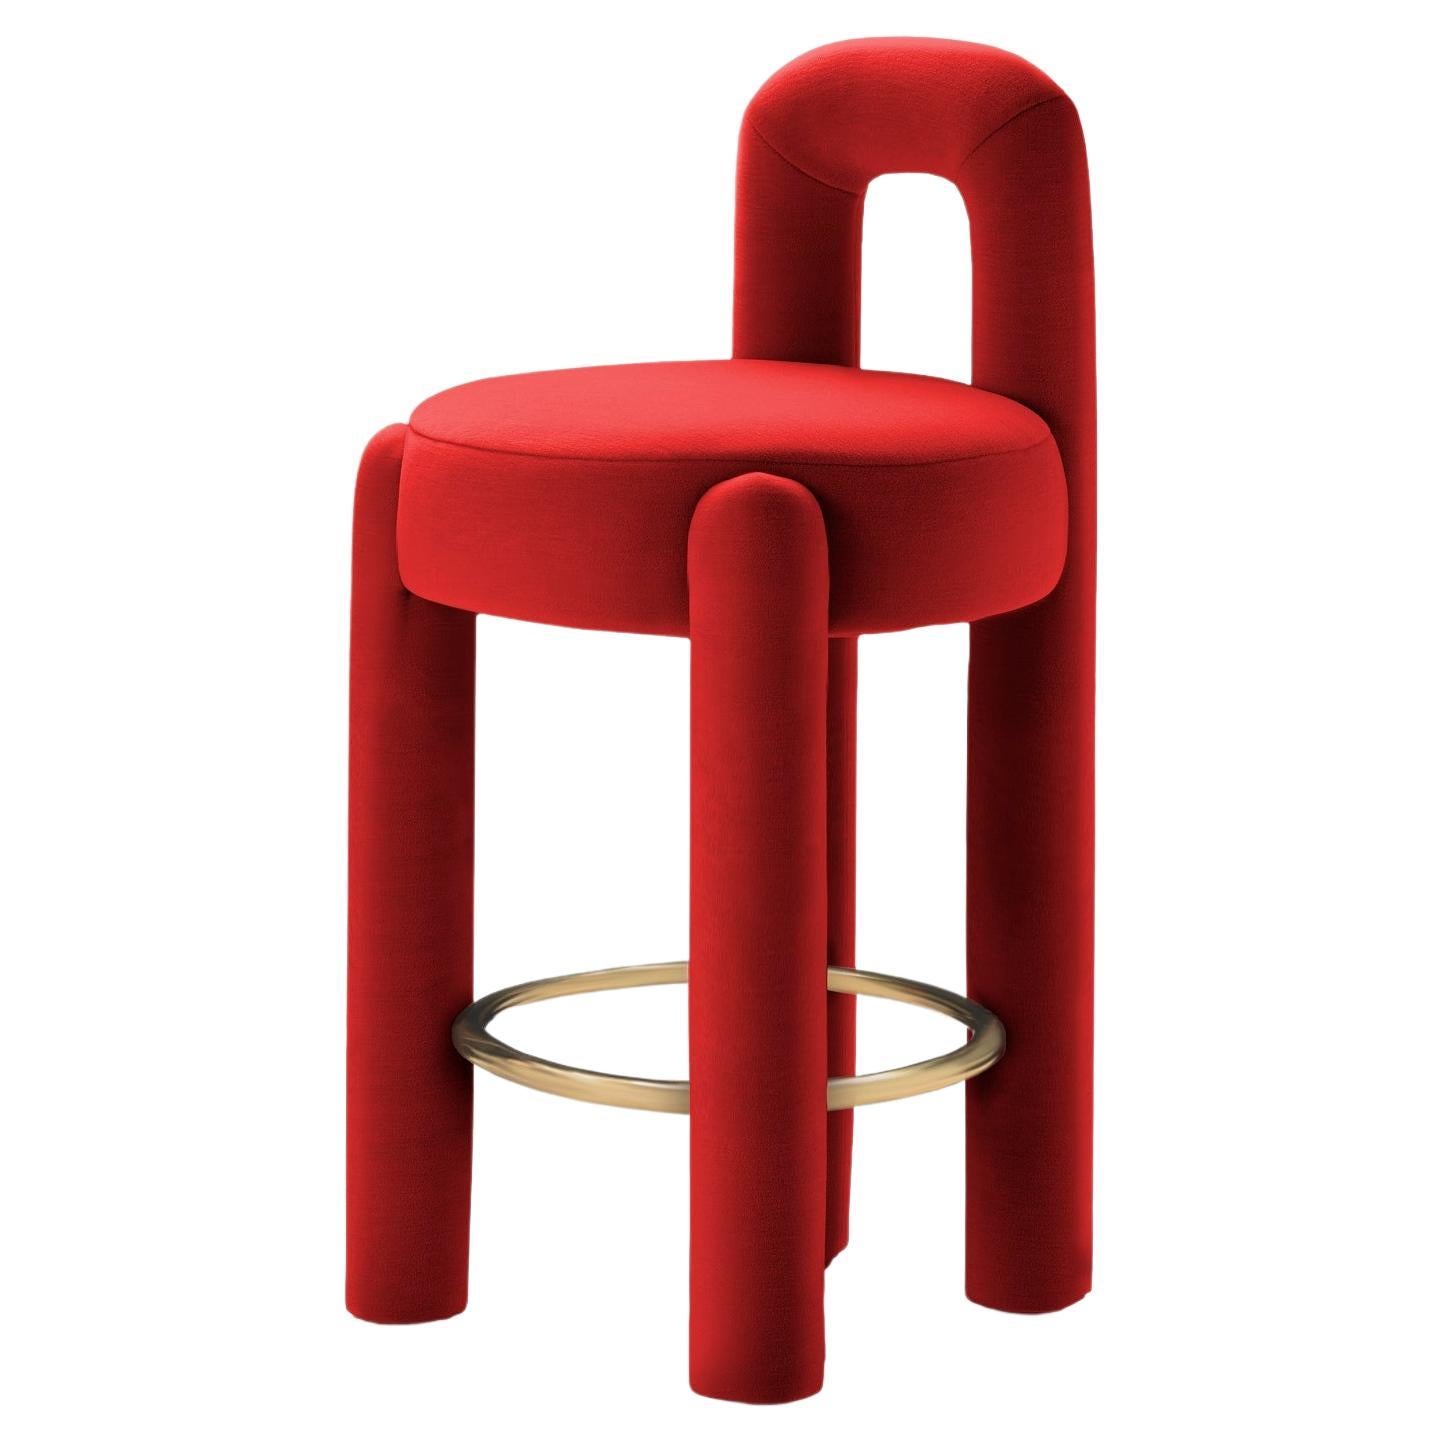 DOOQ! Organic Modern Marlon Counter Chair in Red Kvadrat by P. Franceschini